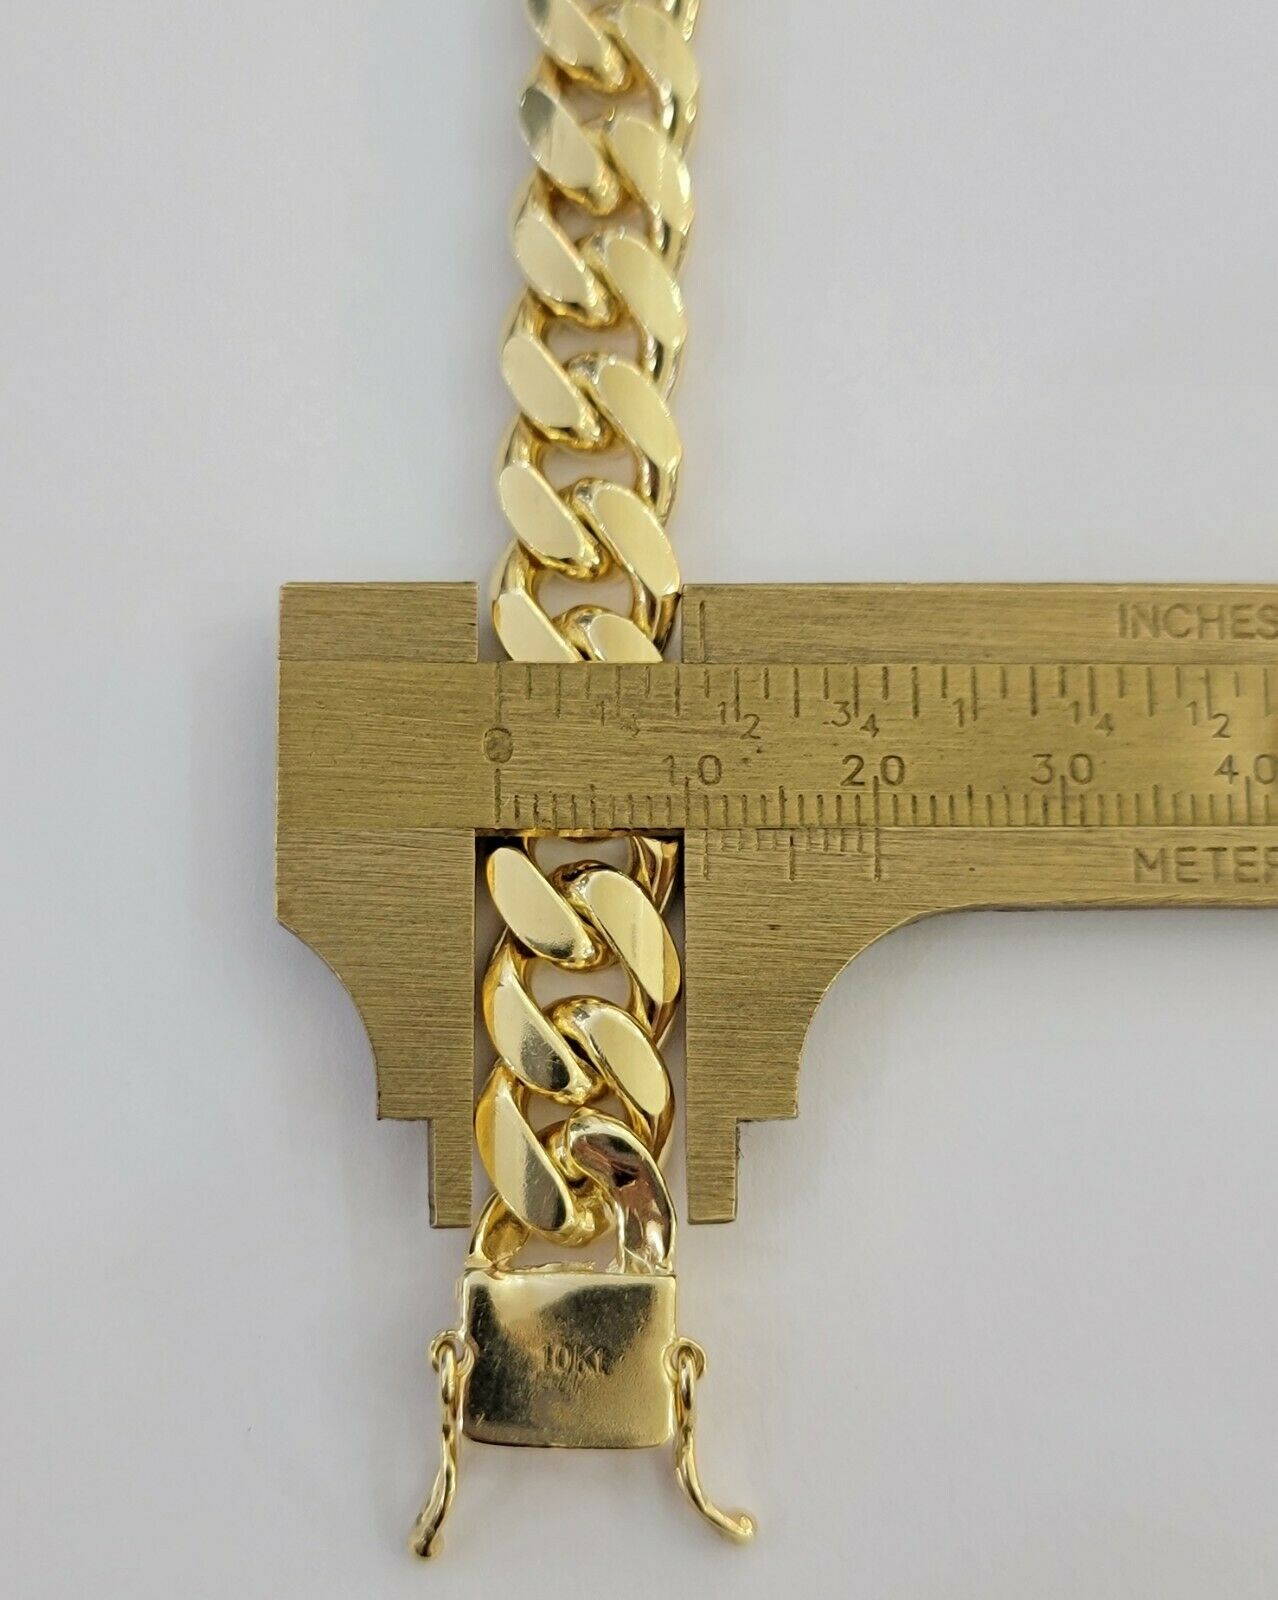 Real 10k Yellow Gold Bracelet Miami Cuban Link 11mm 8